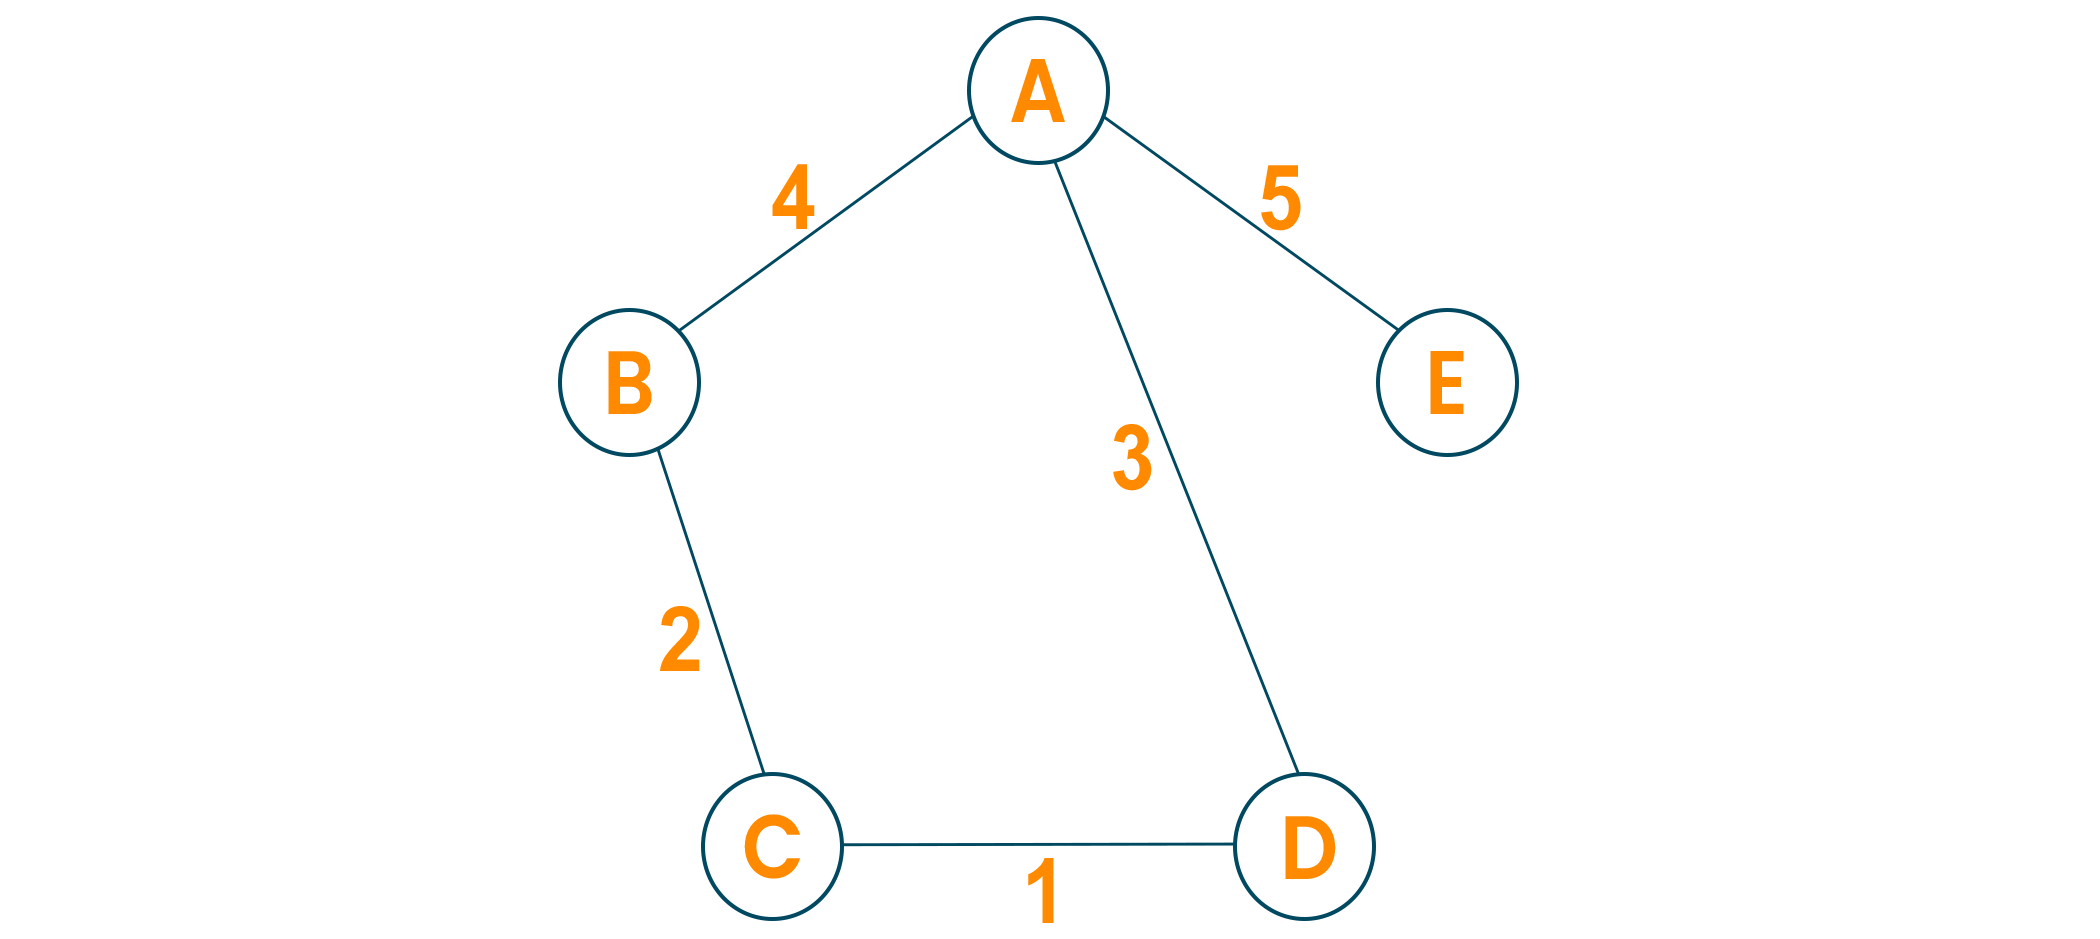 prim's algorithm